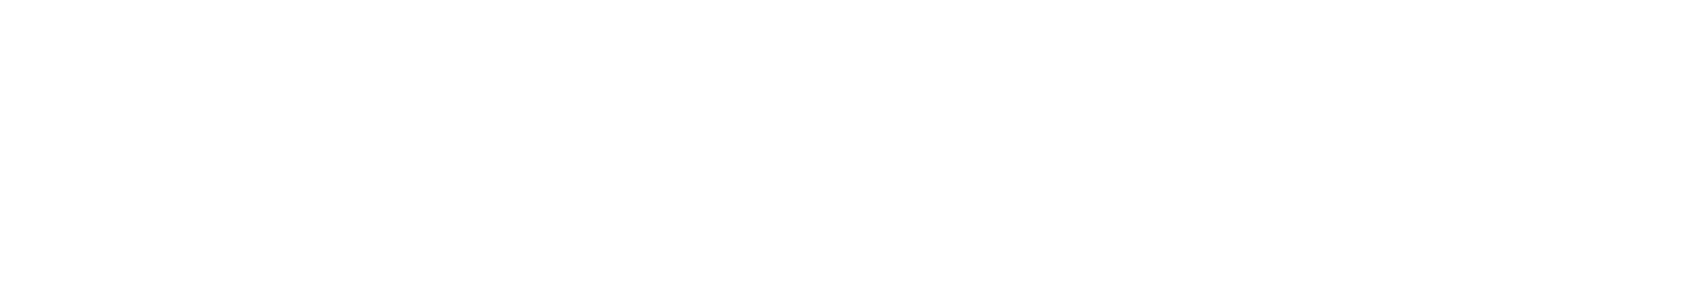 MillerKnoll Logo groß für dunkle Hintergründe (transparentes PNG)